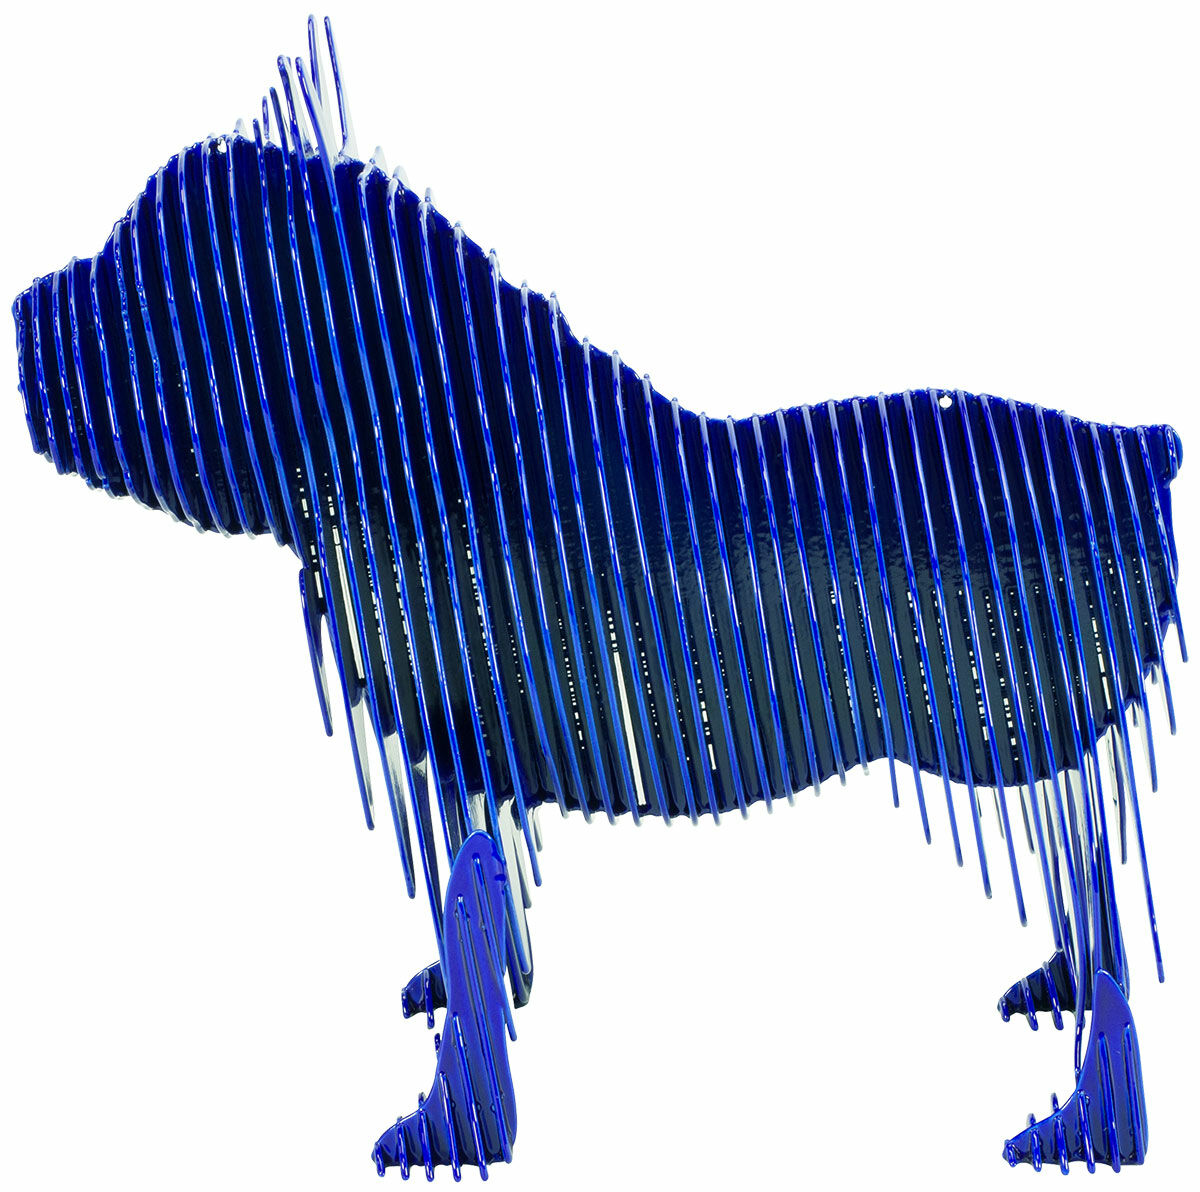 Stahlskulptur "Bulldogge", blaue Version